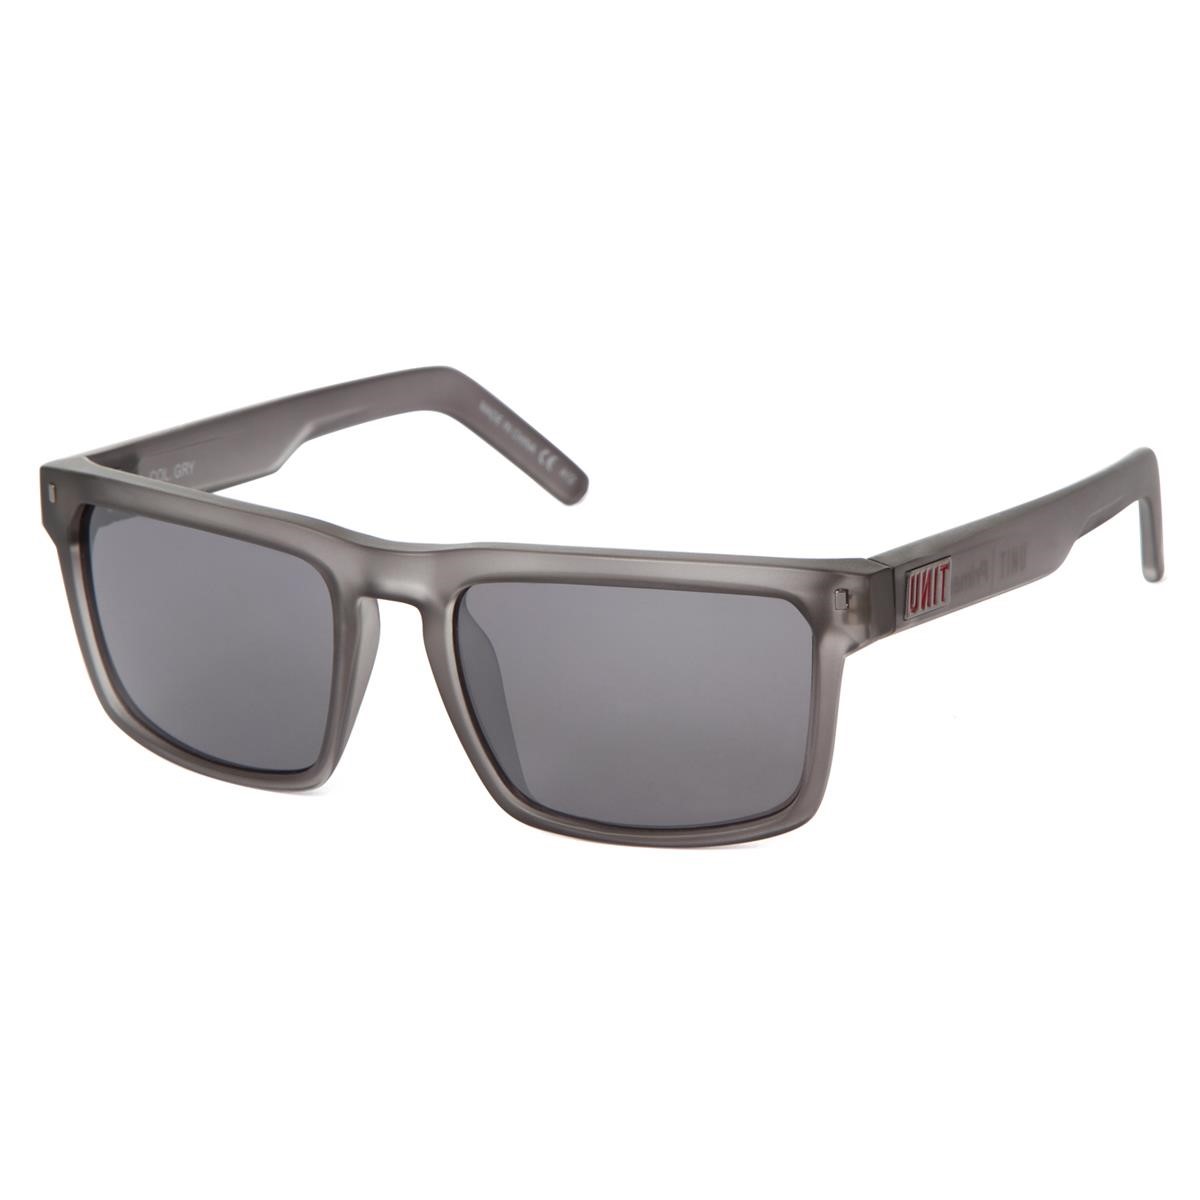 Unit Sunglasses Primer Grey